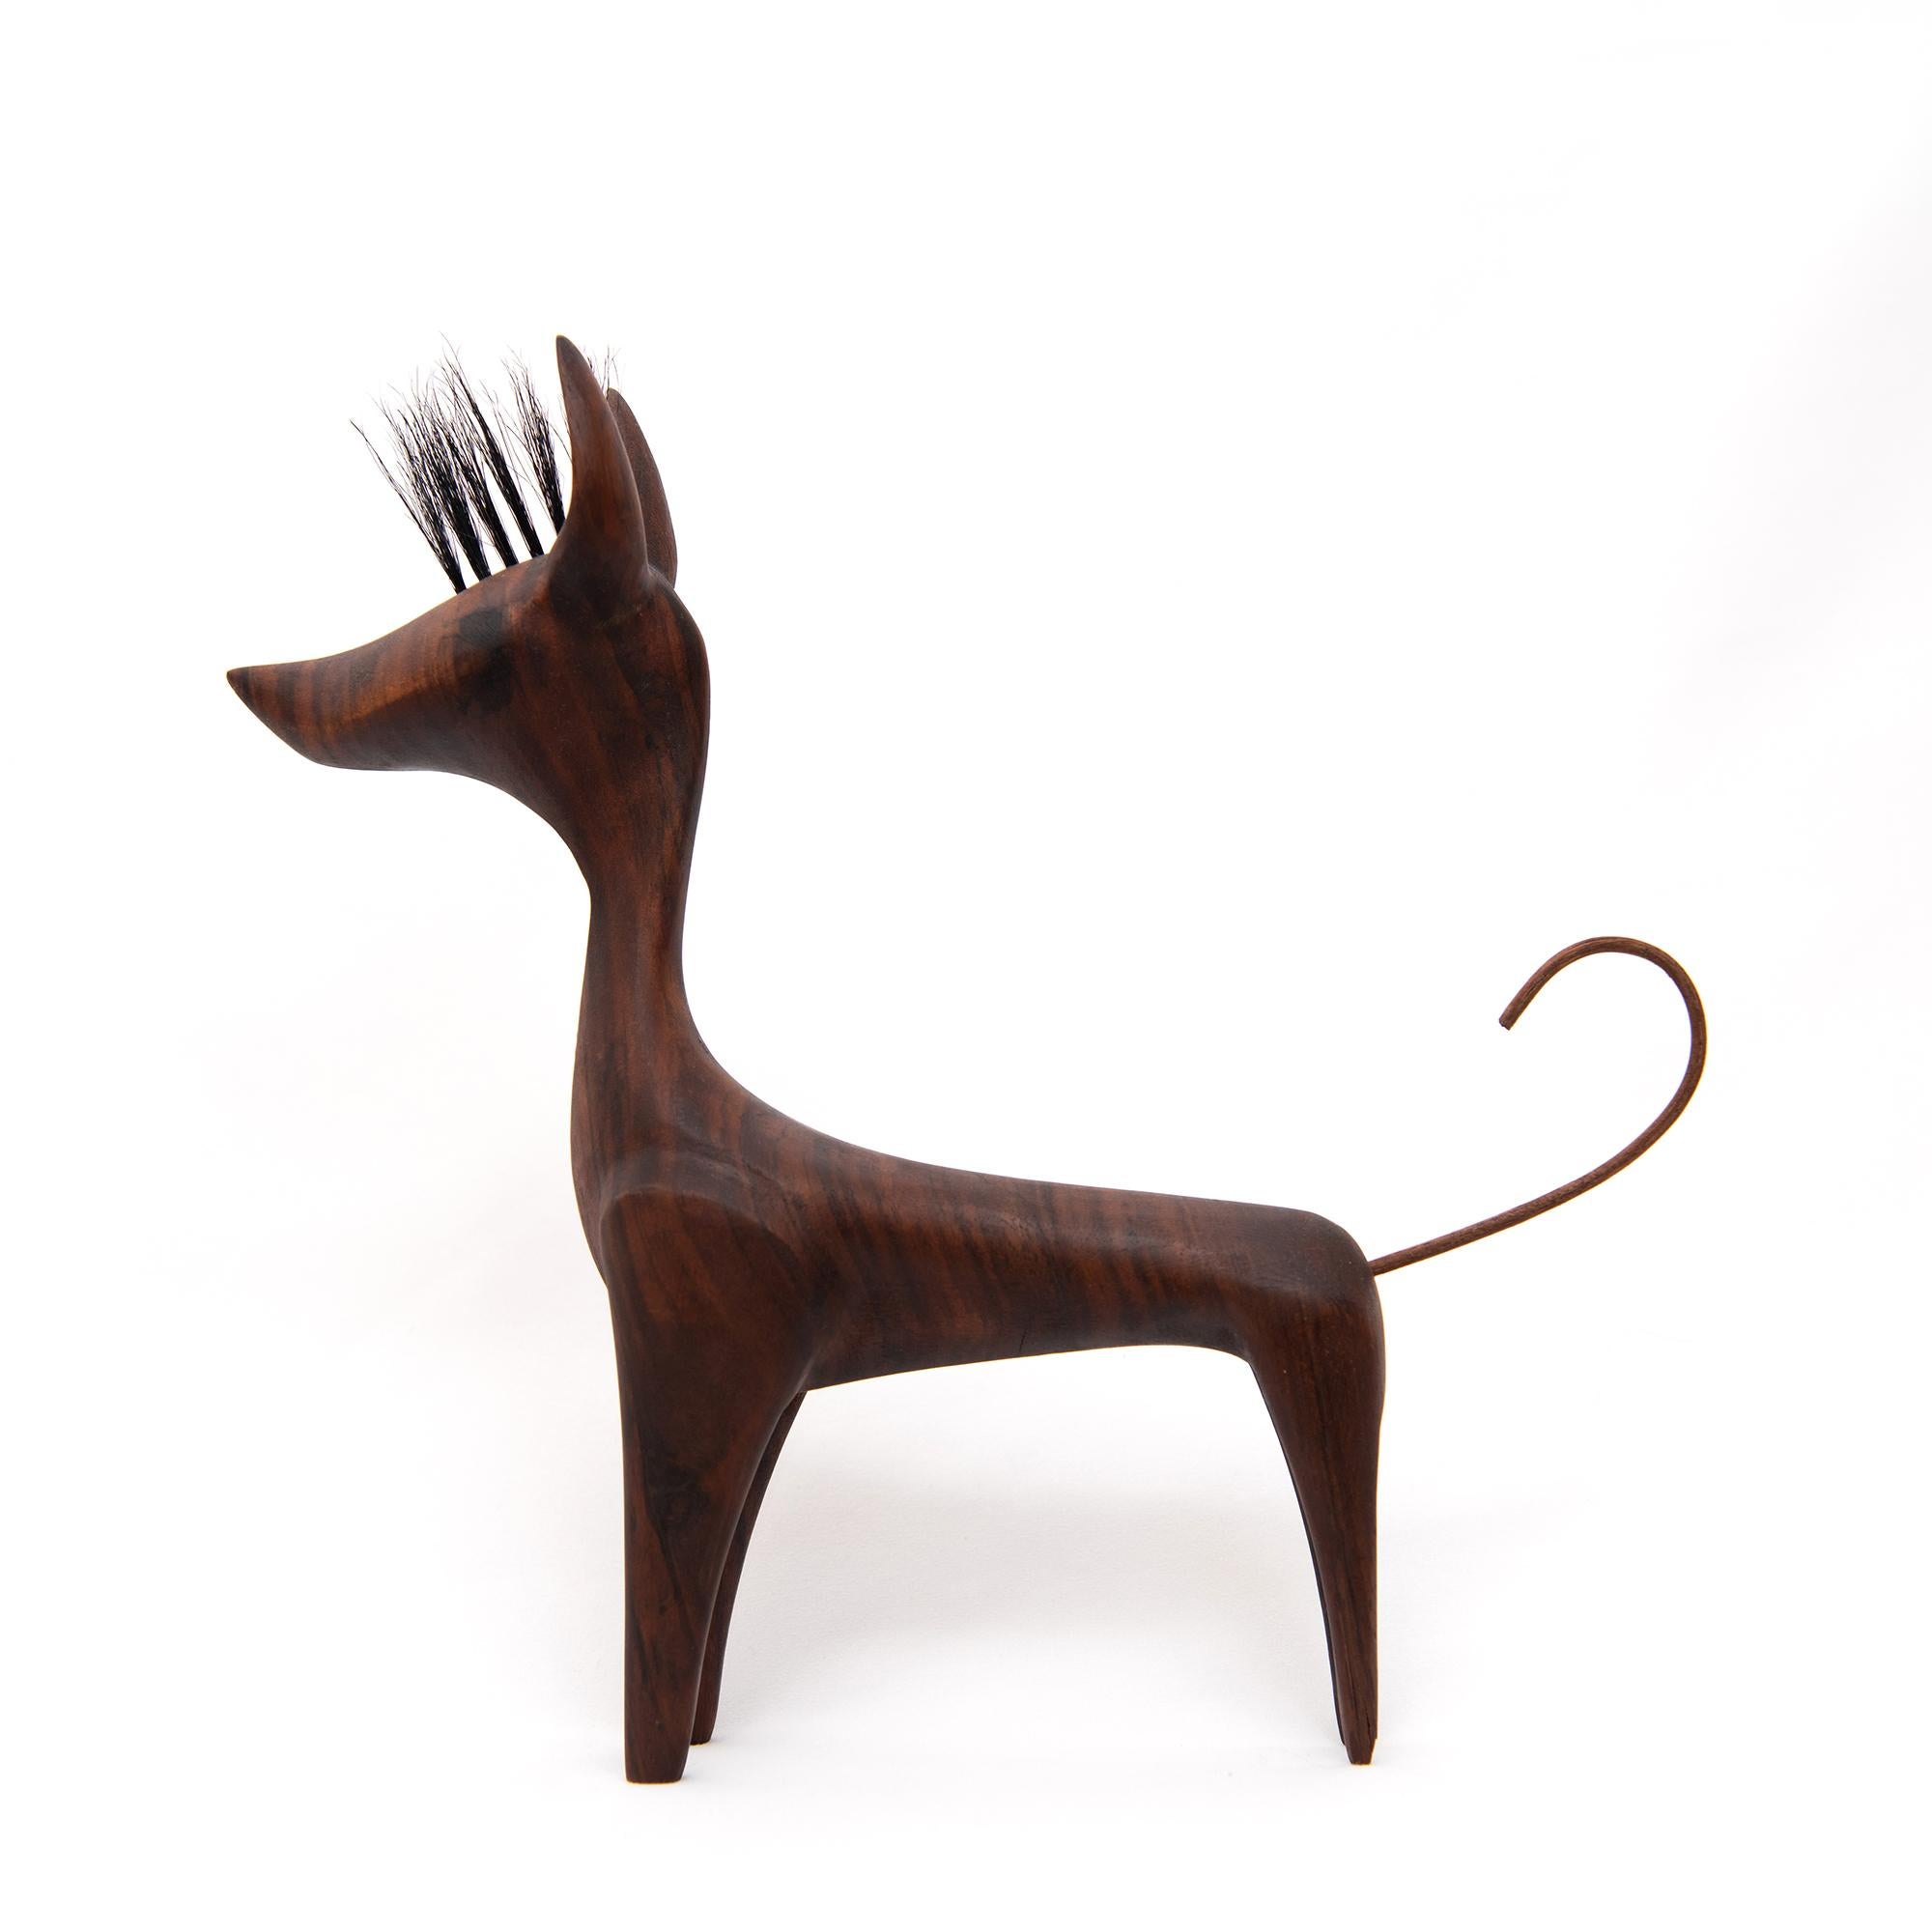 Contemporary Lolo by Design VA . Xoloitzcuintle Wood Sculpture For Sale